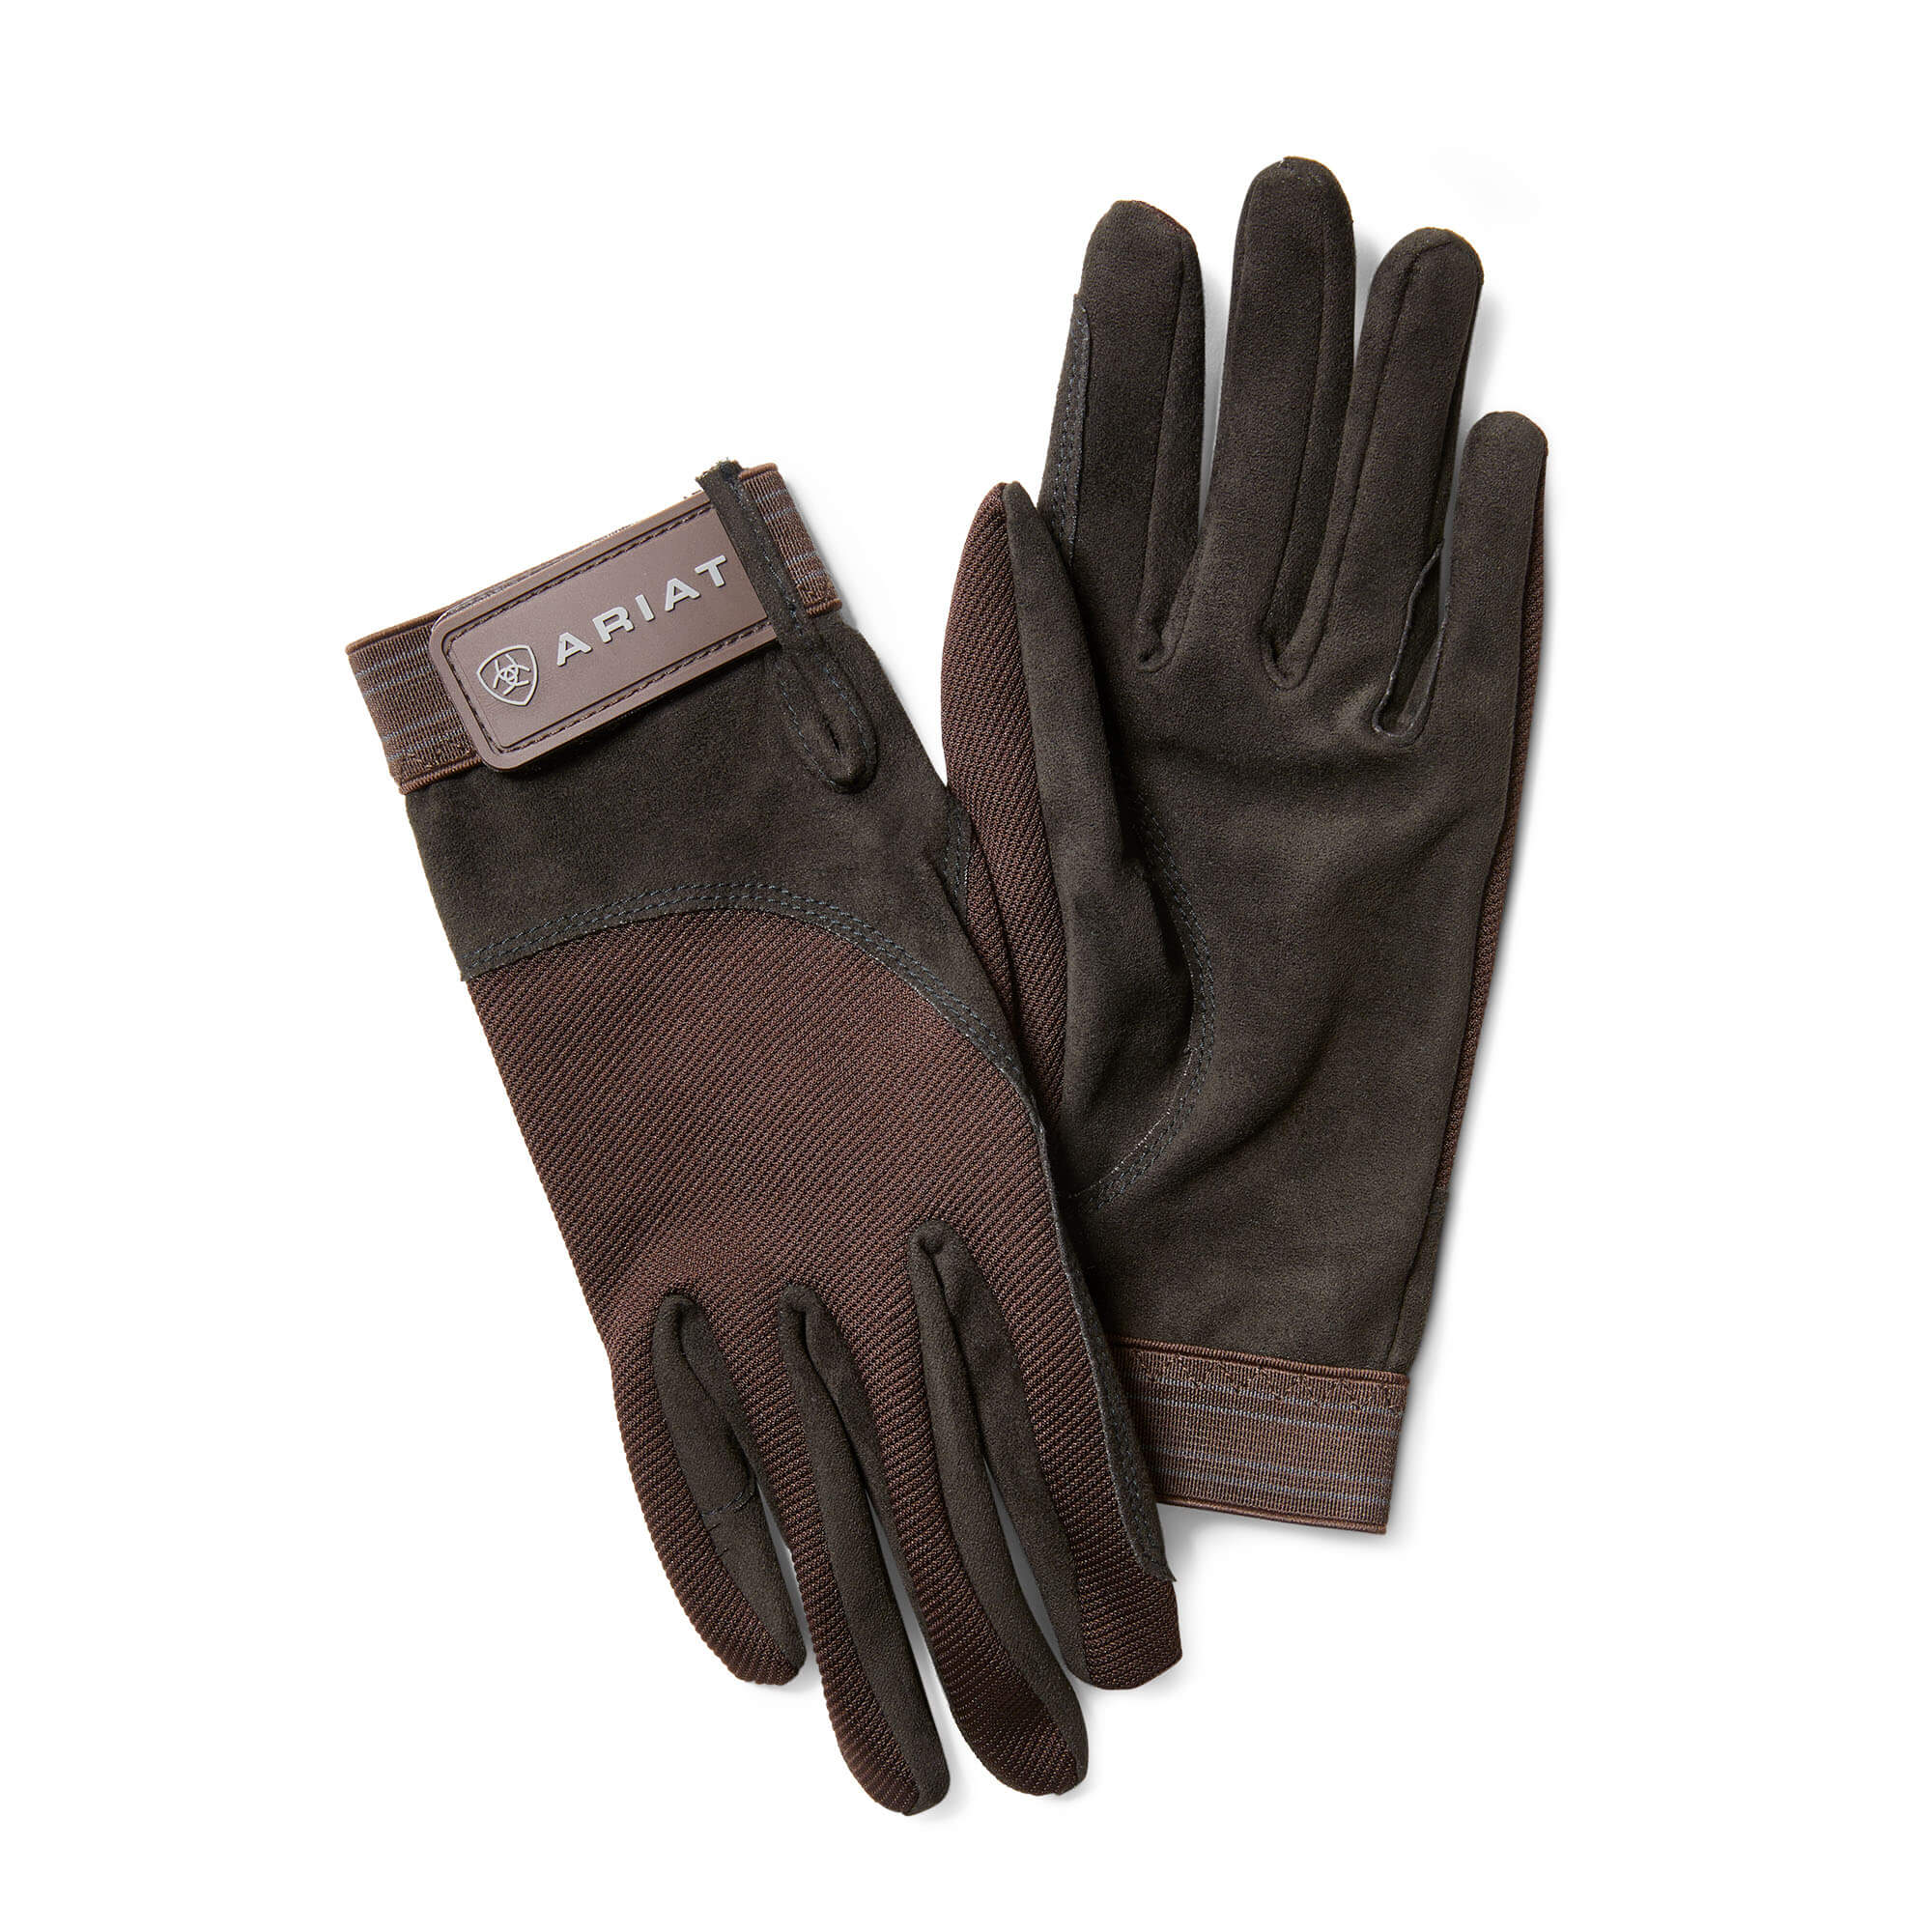 60% OFF ARIAT Tek Grip Riding Gloves - Bark - Size: 7